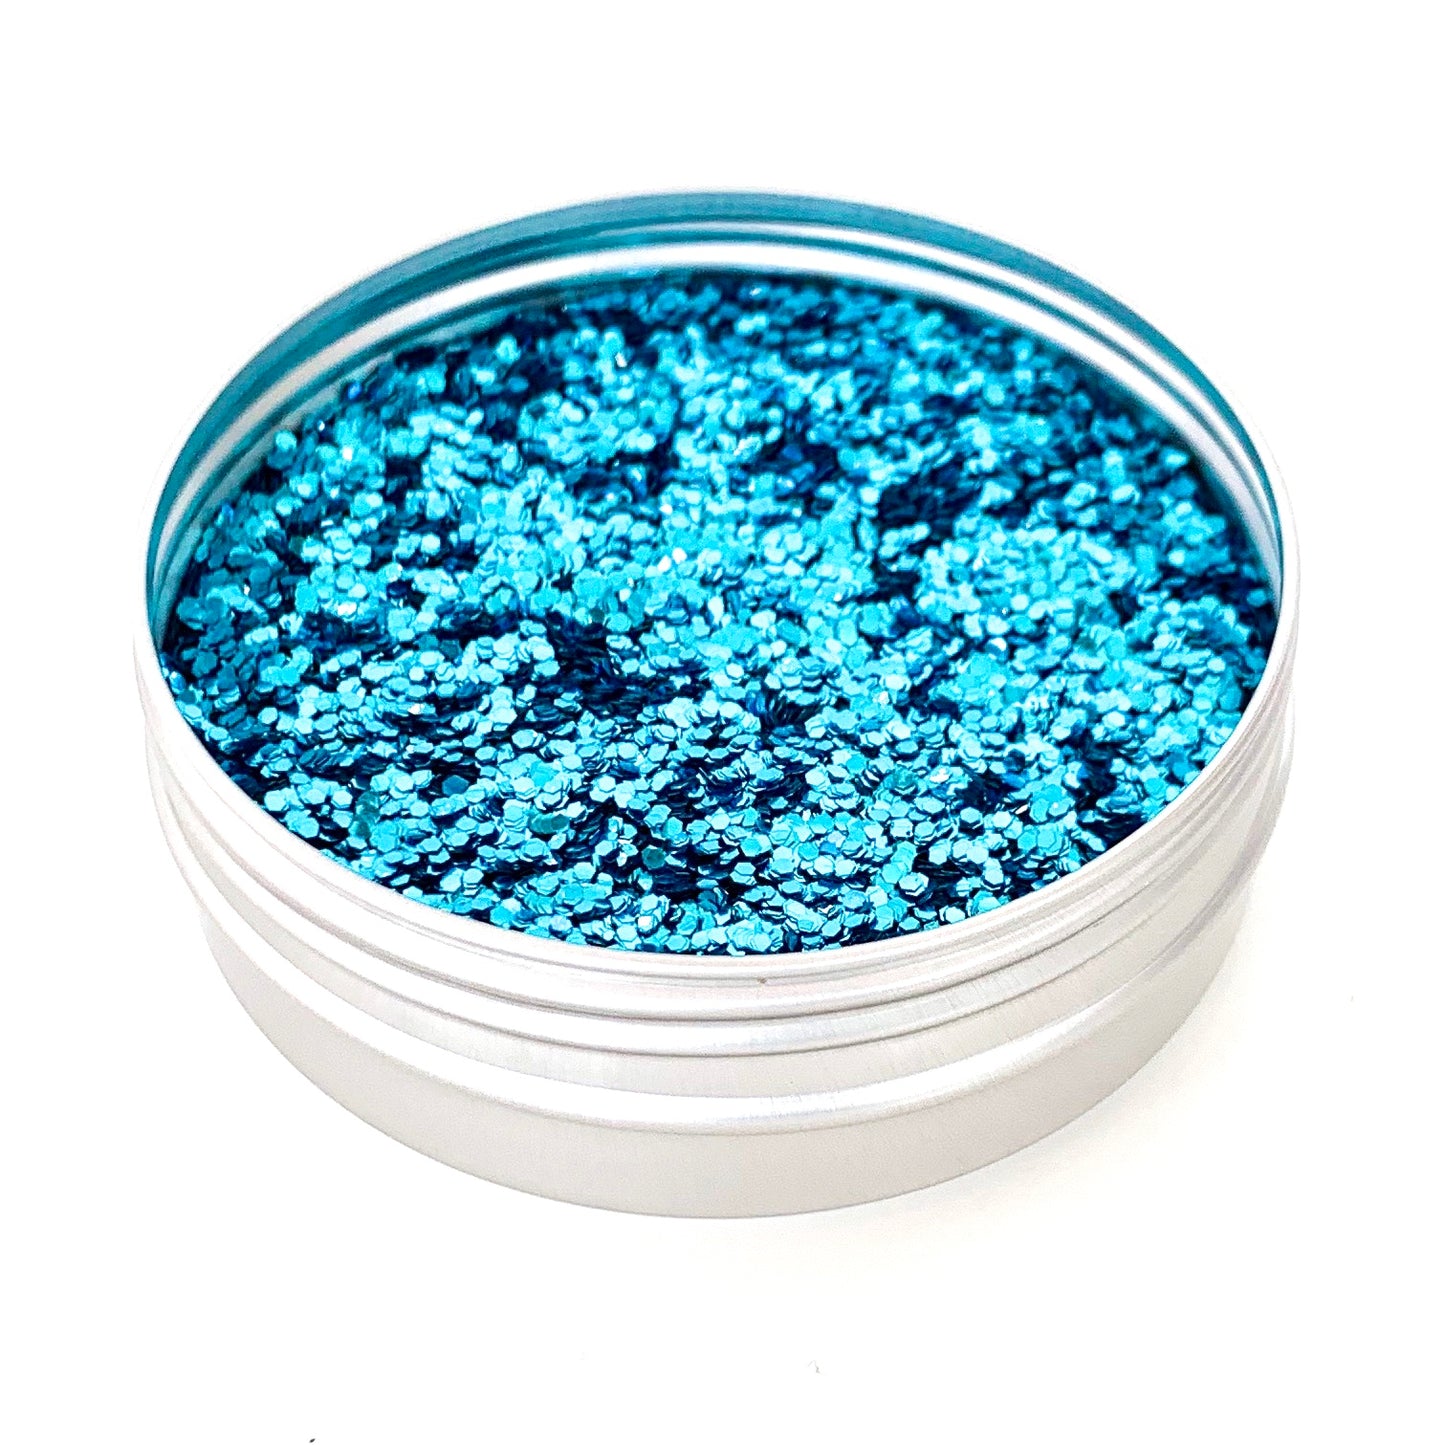 Sky Blue Chunky Biodegradable Glitter